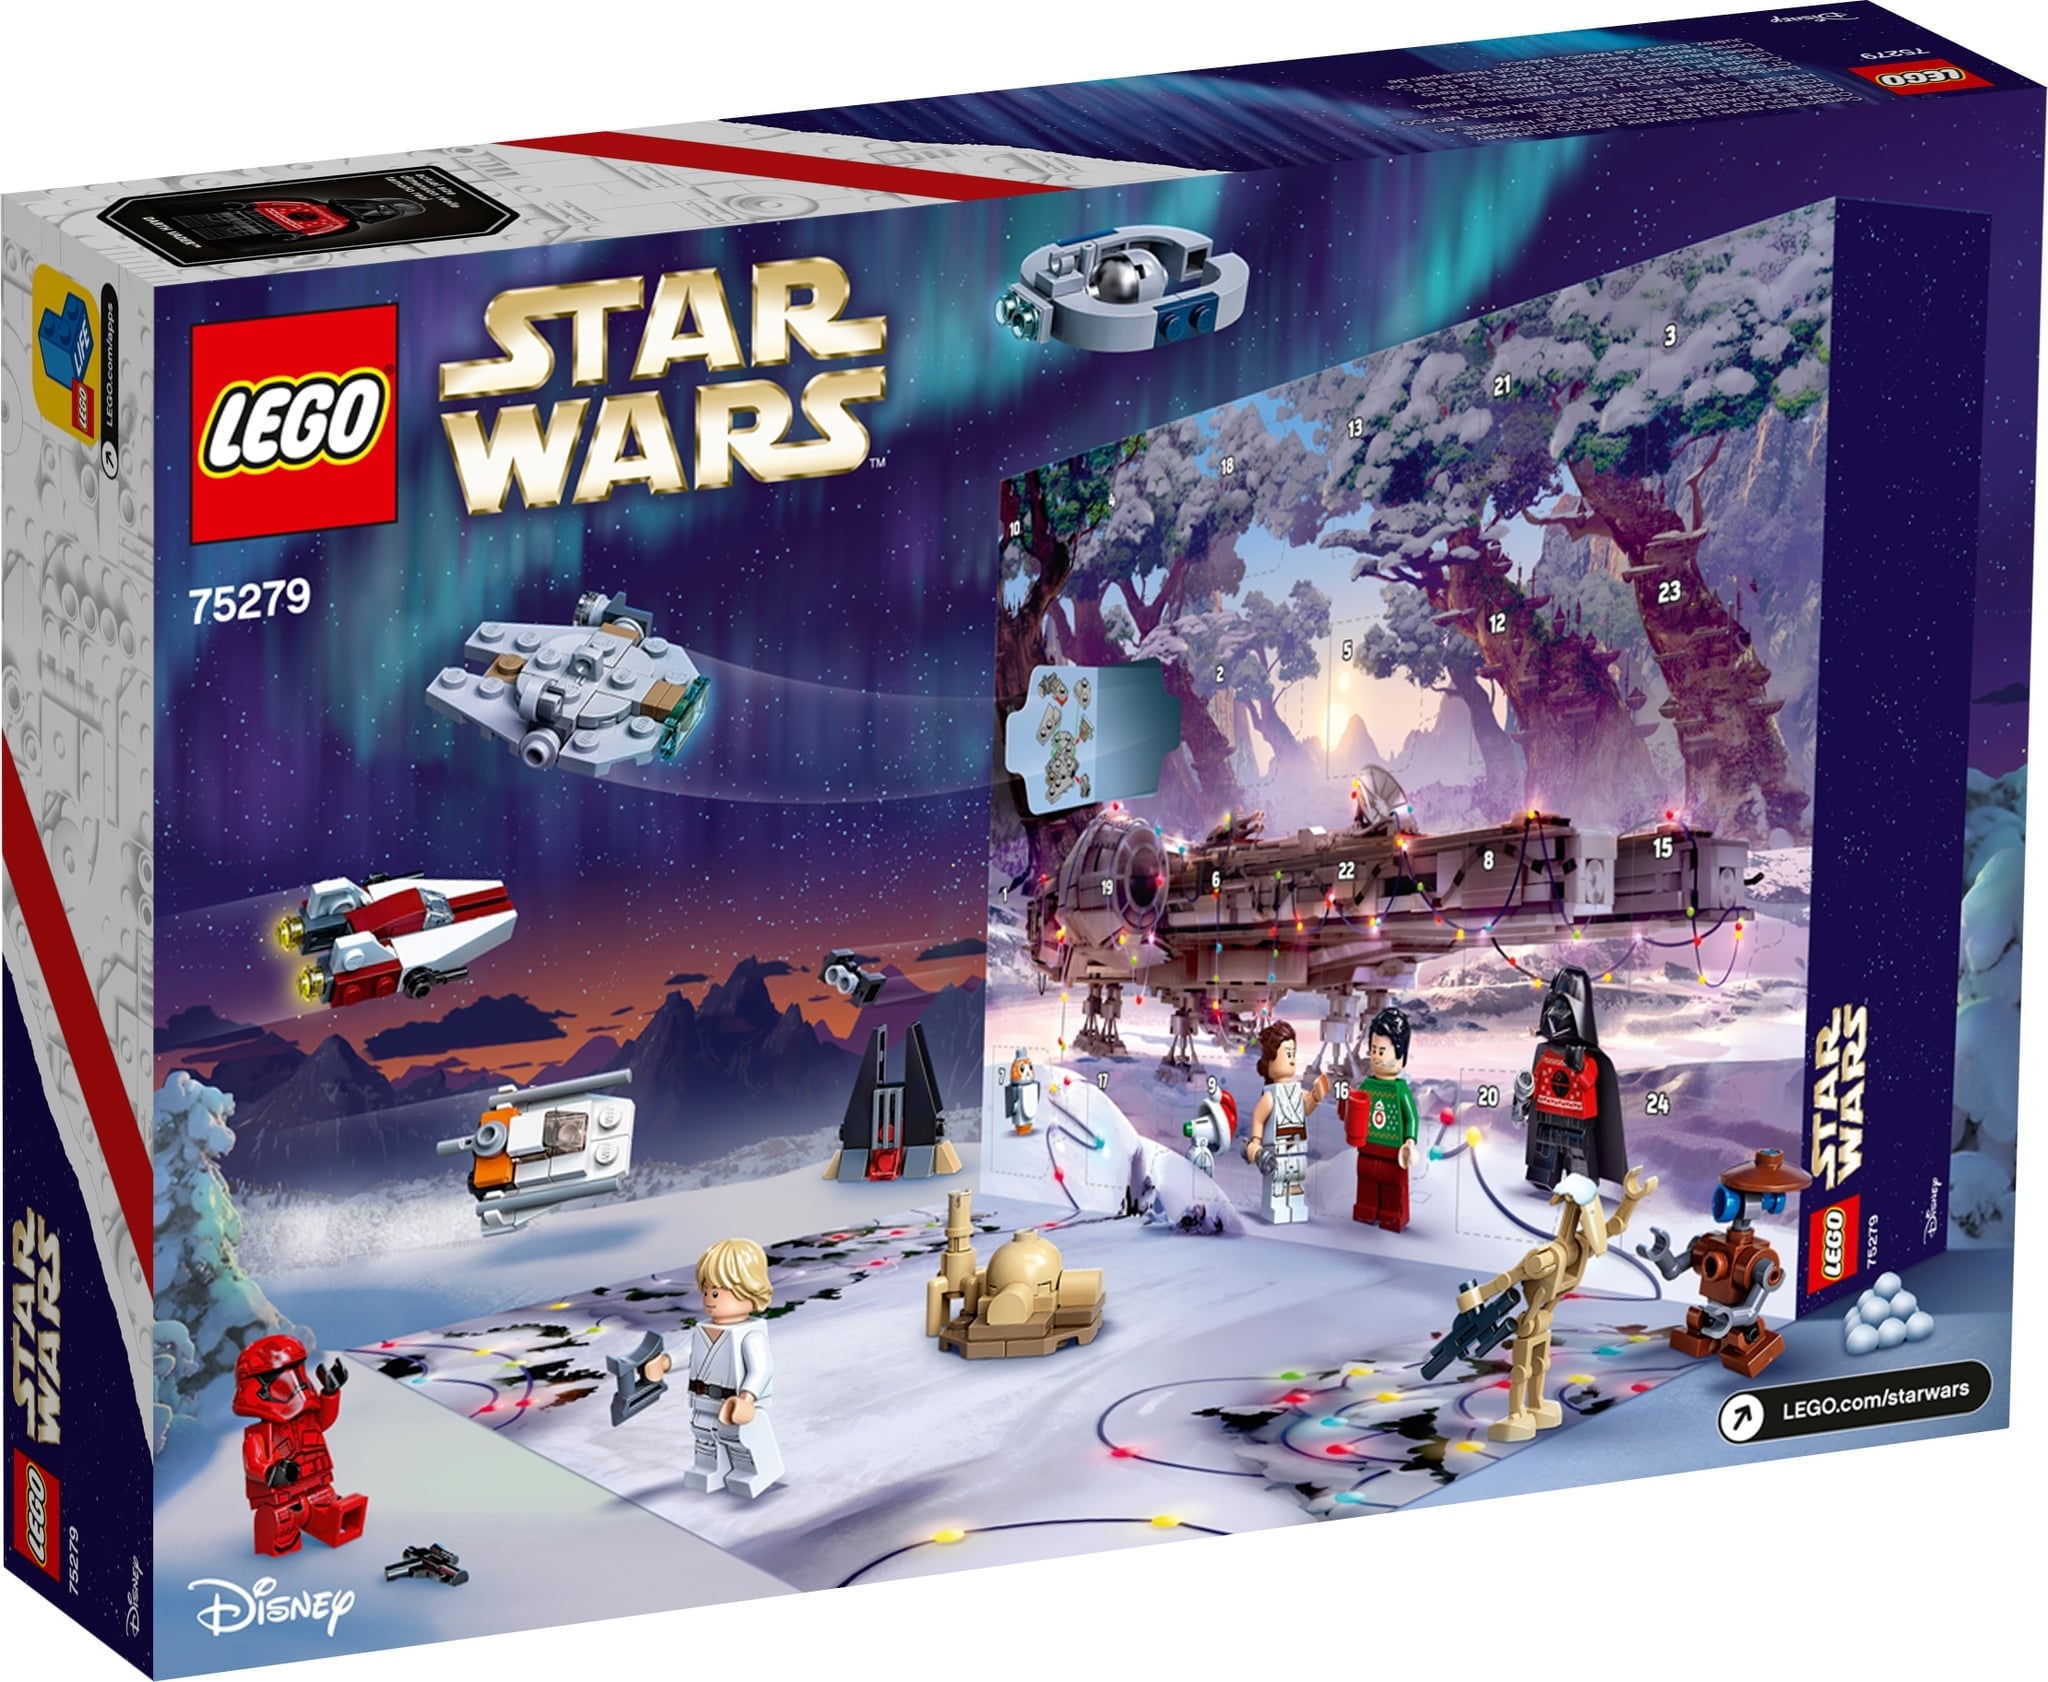 Take Lego Star Wars Advent Calendar 2021 Code